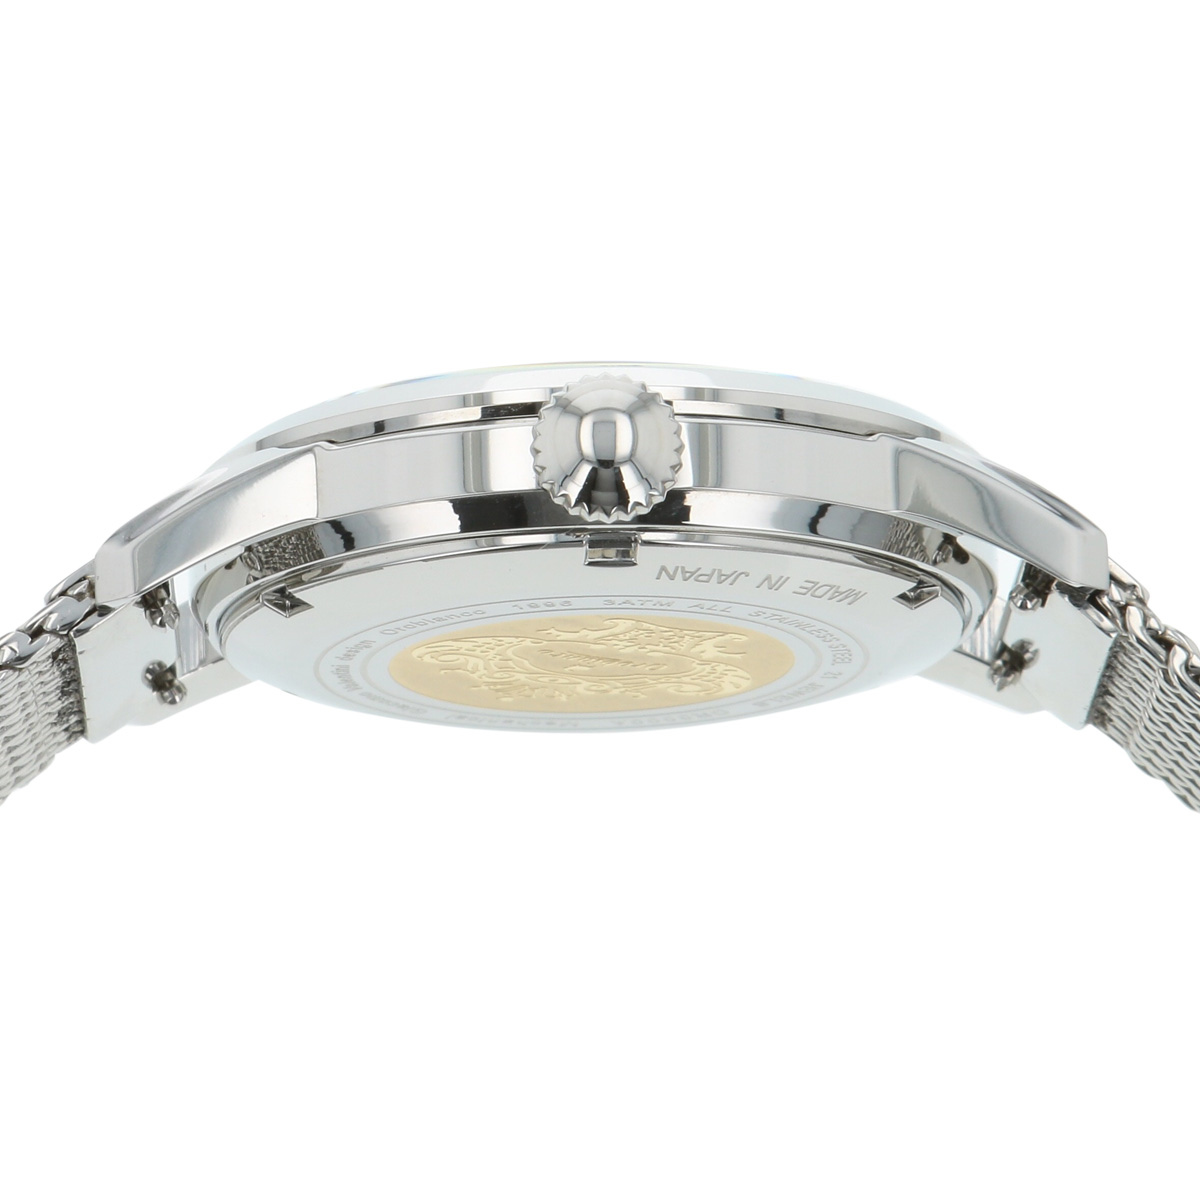 Orobianco オロビアンコ 時計 腕時計 メンズ 自動巻き アナログ ERUDITO シルバー OR0073-101